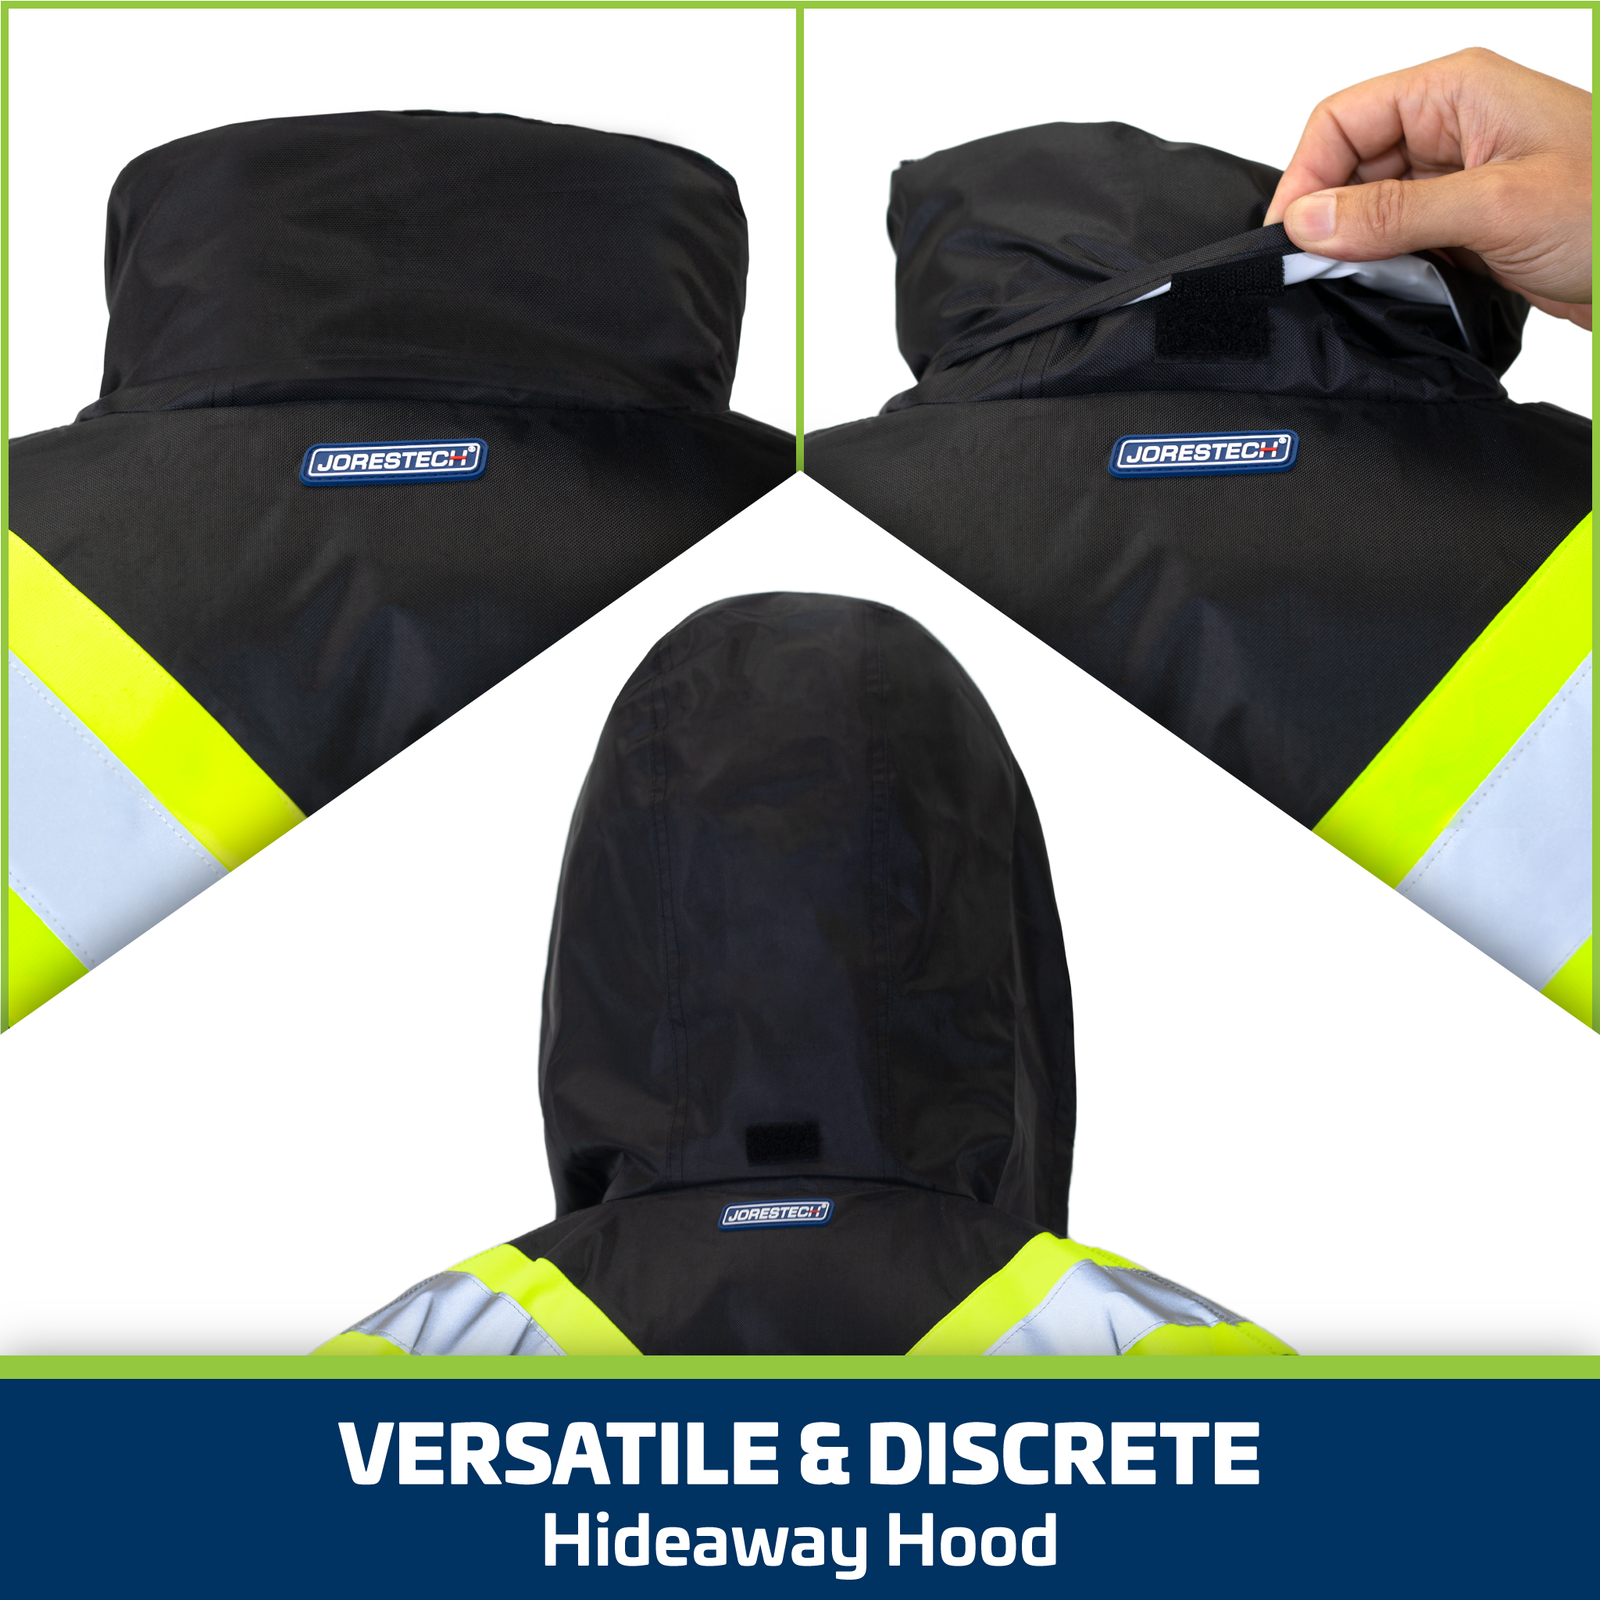 JORESTECH waterproof safety jacket with versatile and discrete hideaway hood 